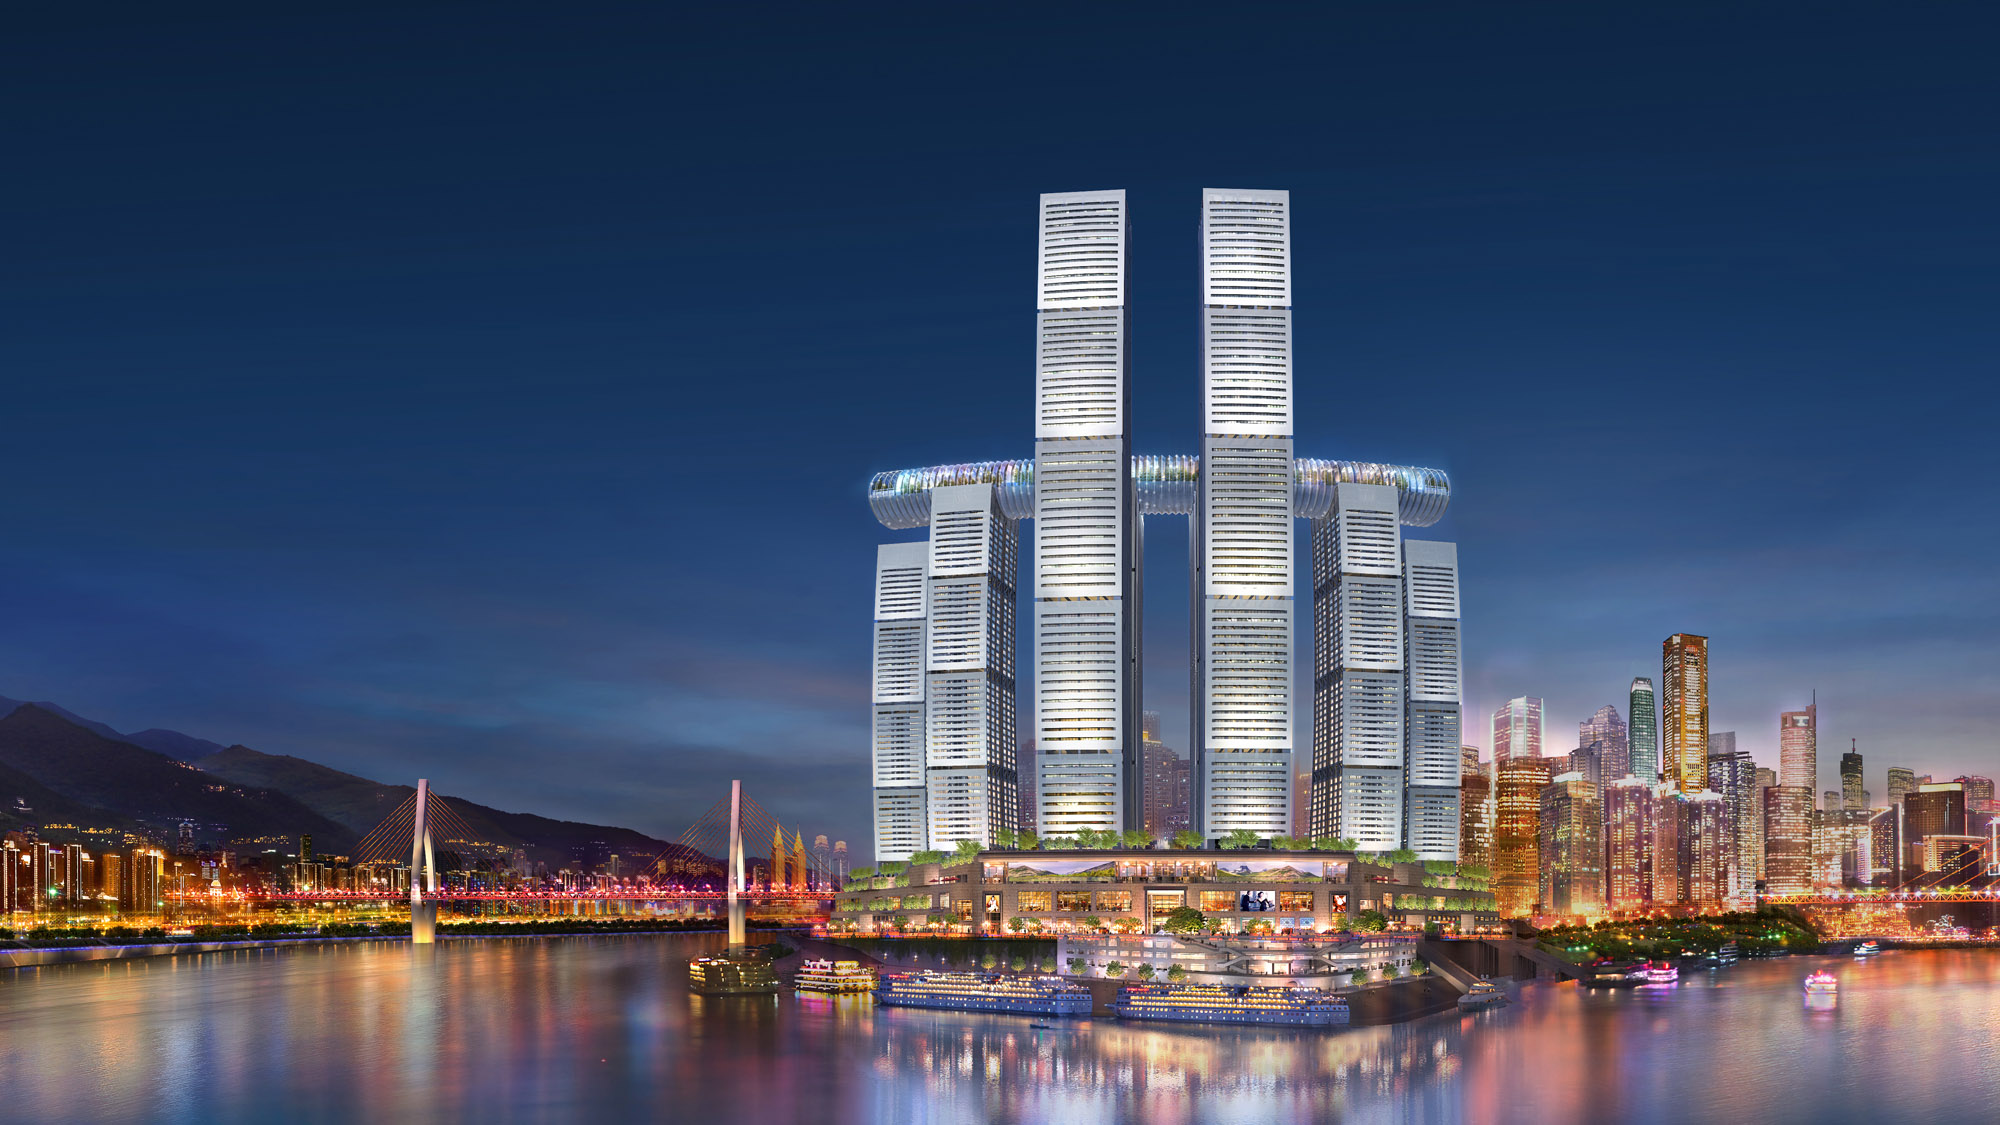 Raffles City Chongqing 2 2000x1125c Safdie Architects CapitaLand China Investment Co Ltd1.jpg